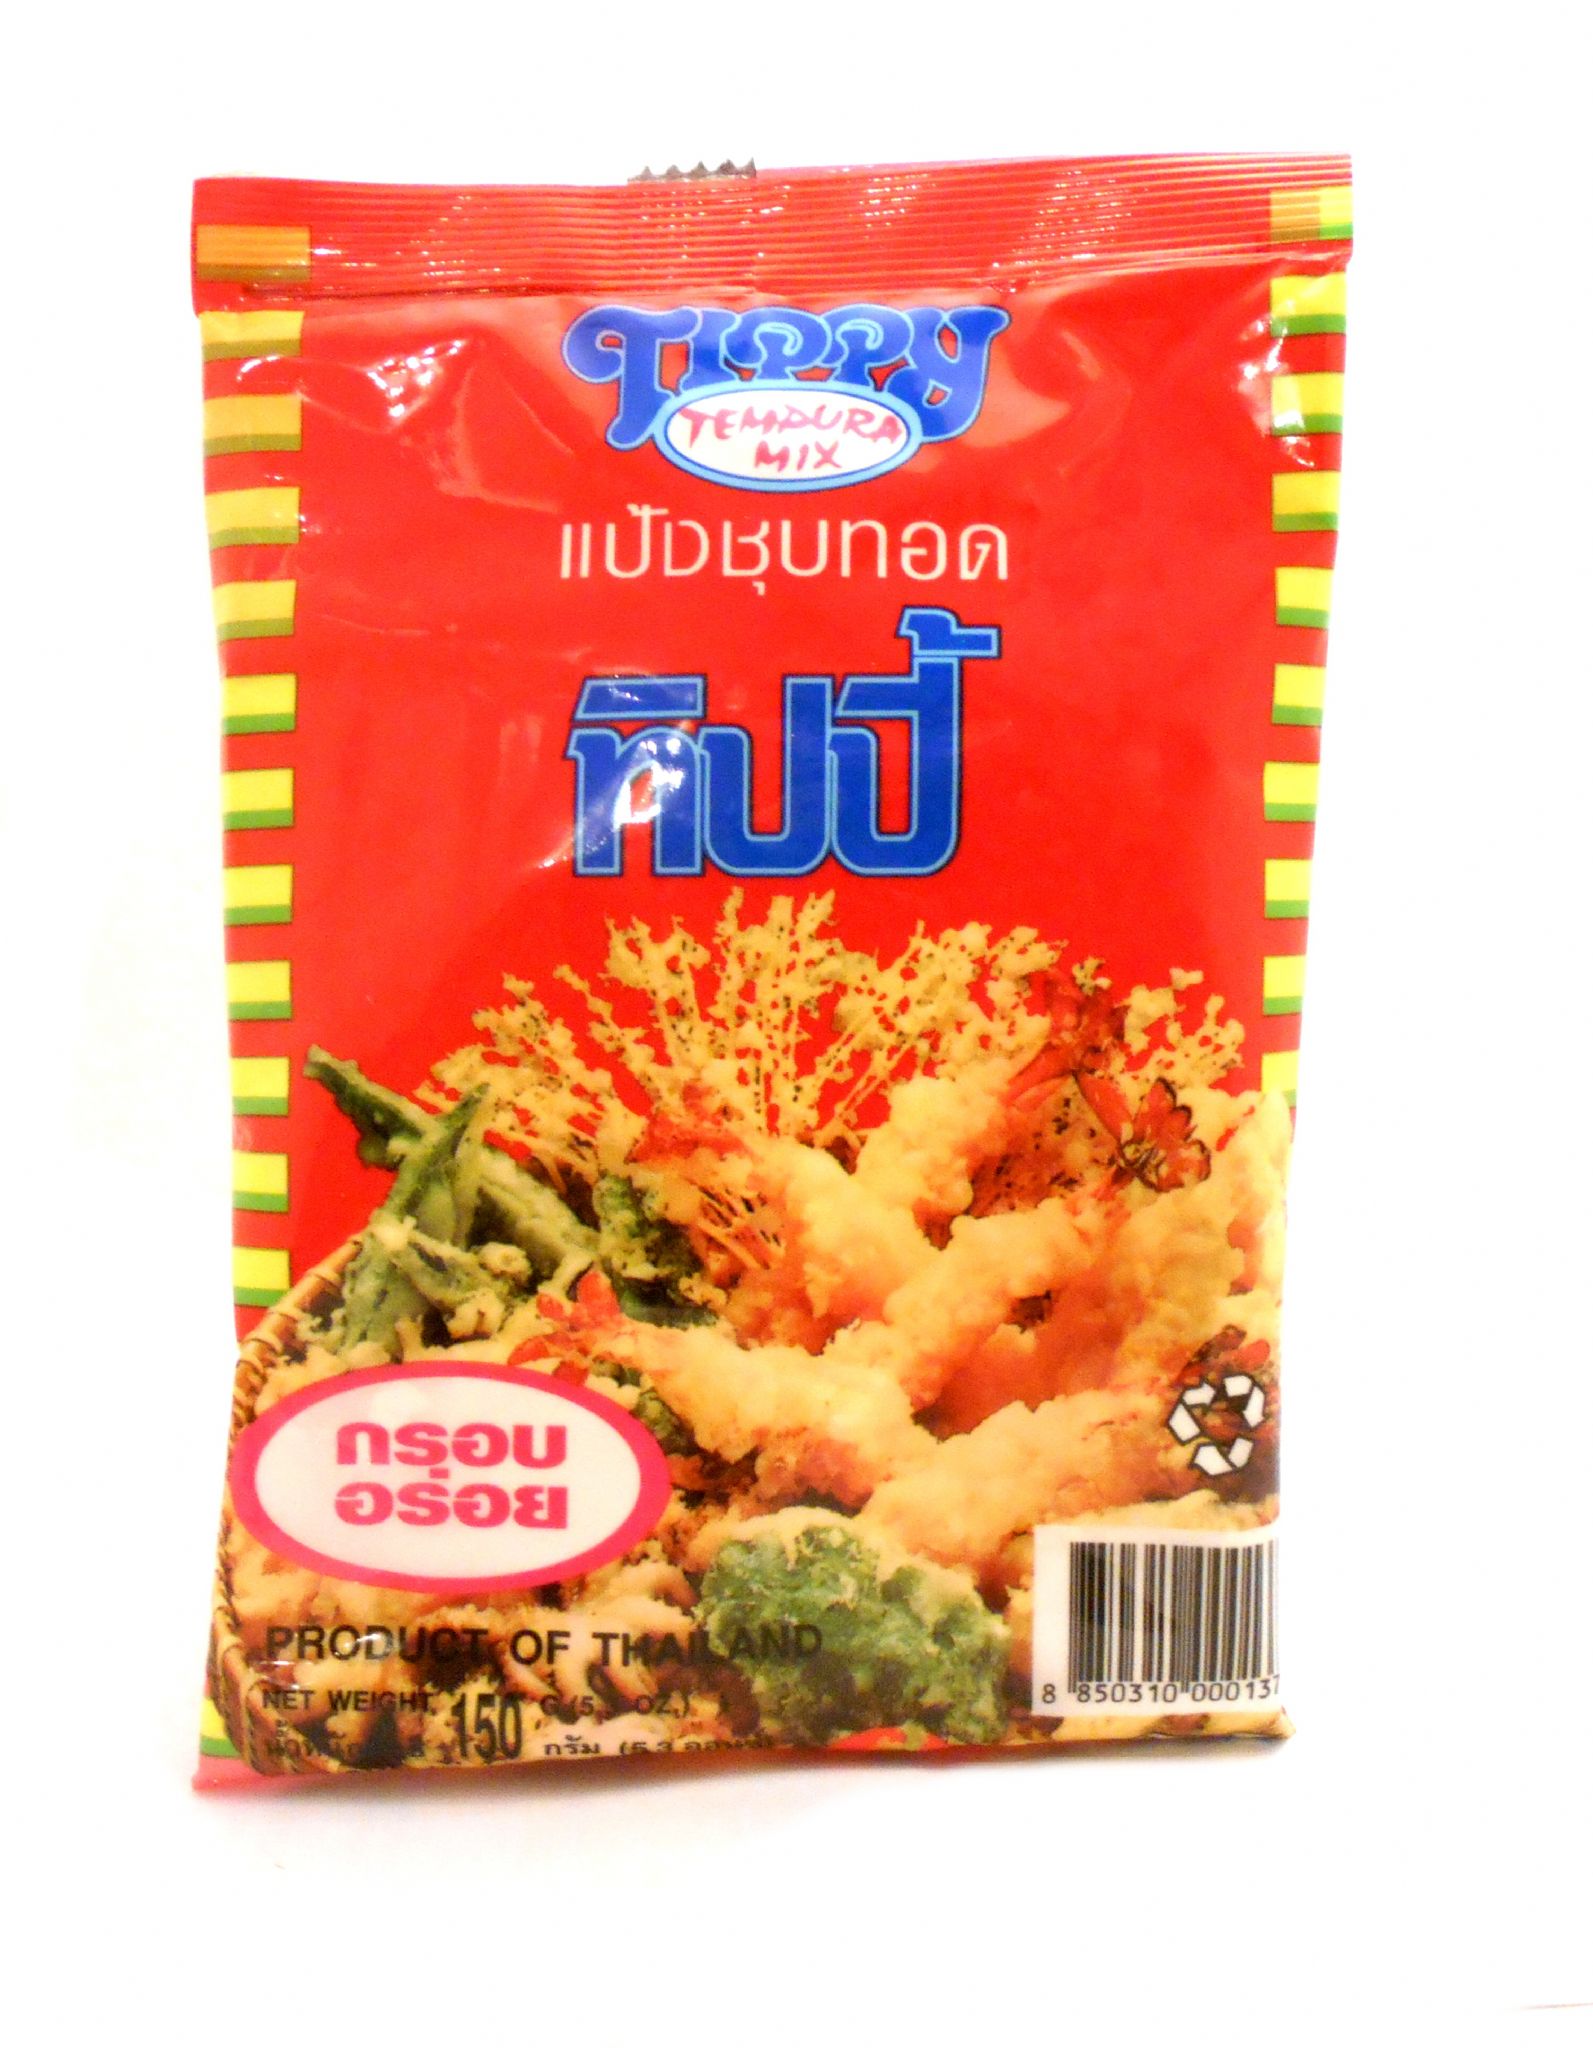 Tempura Batter [Thai Tempura Flour] by Tippy | Buy Online at the ...